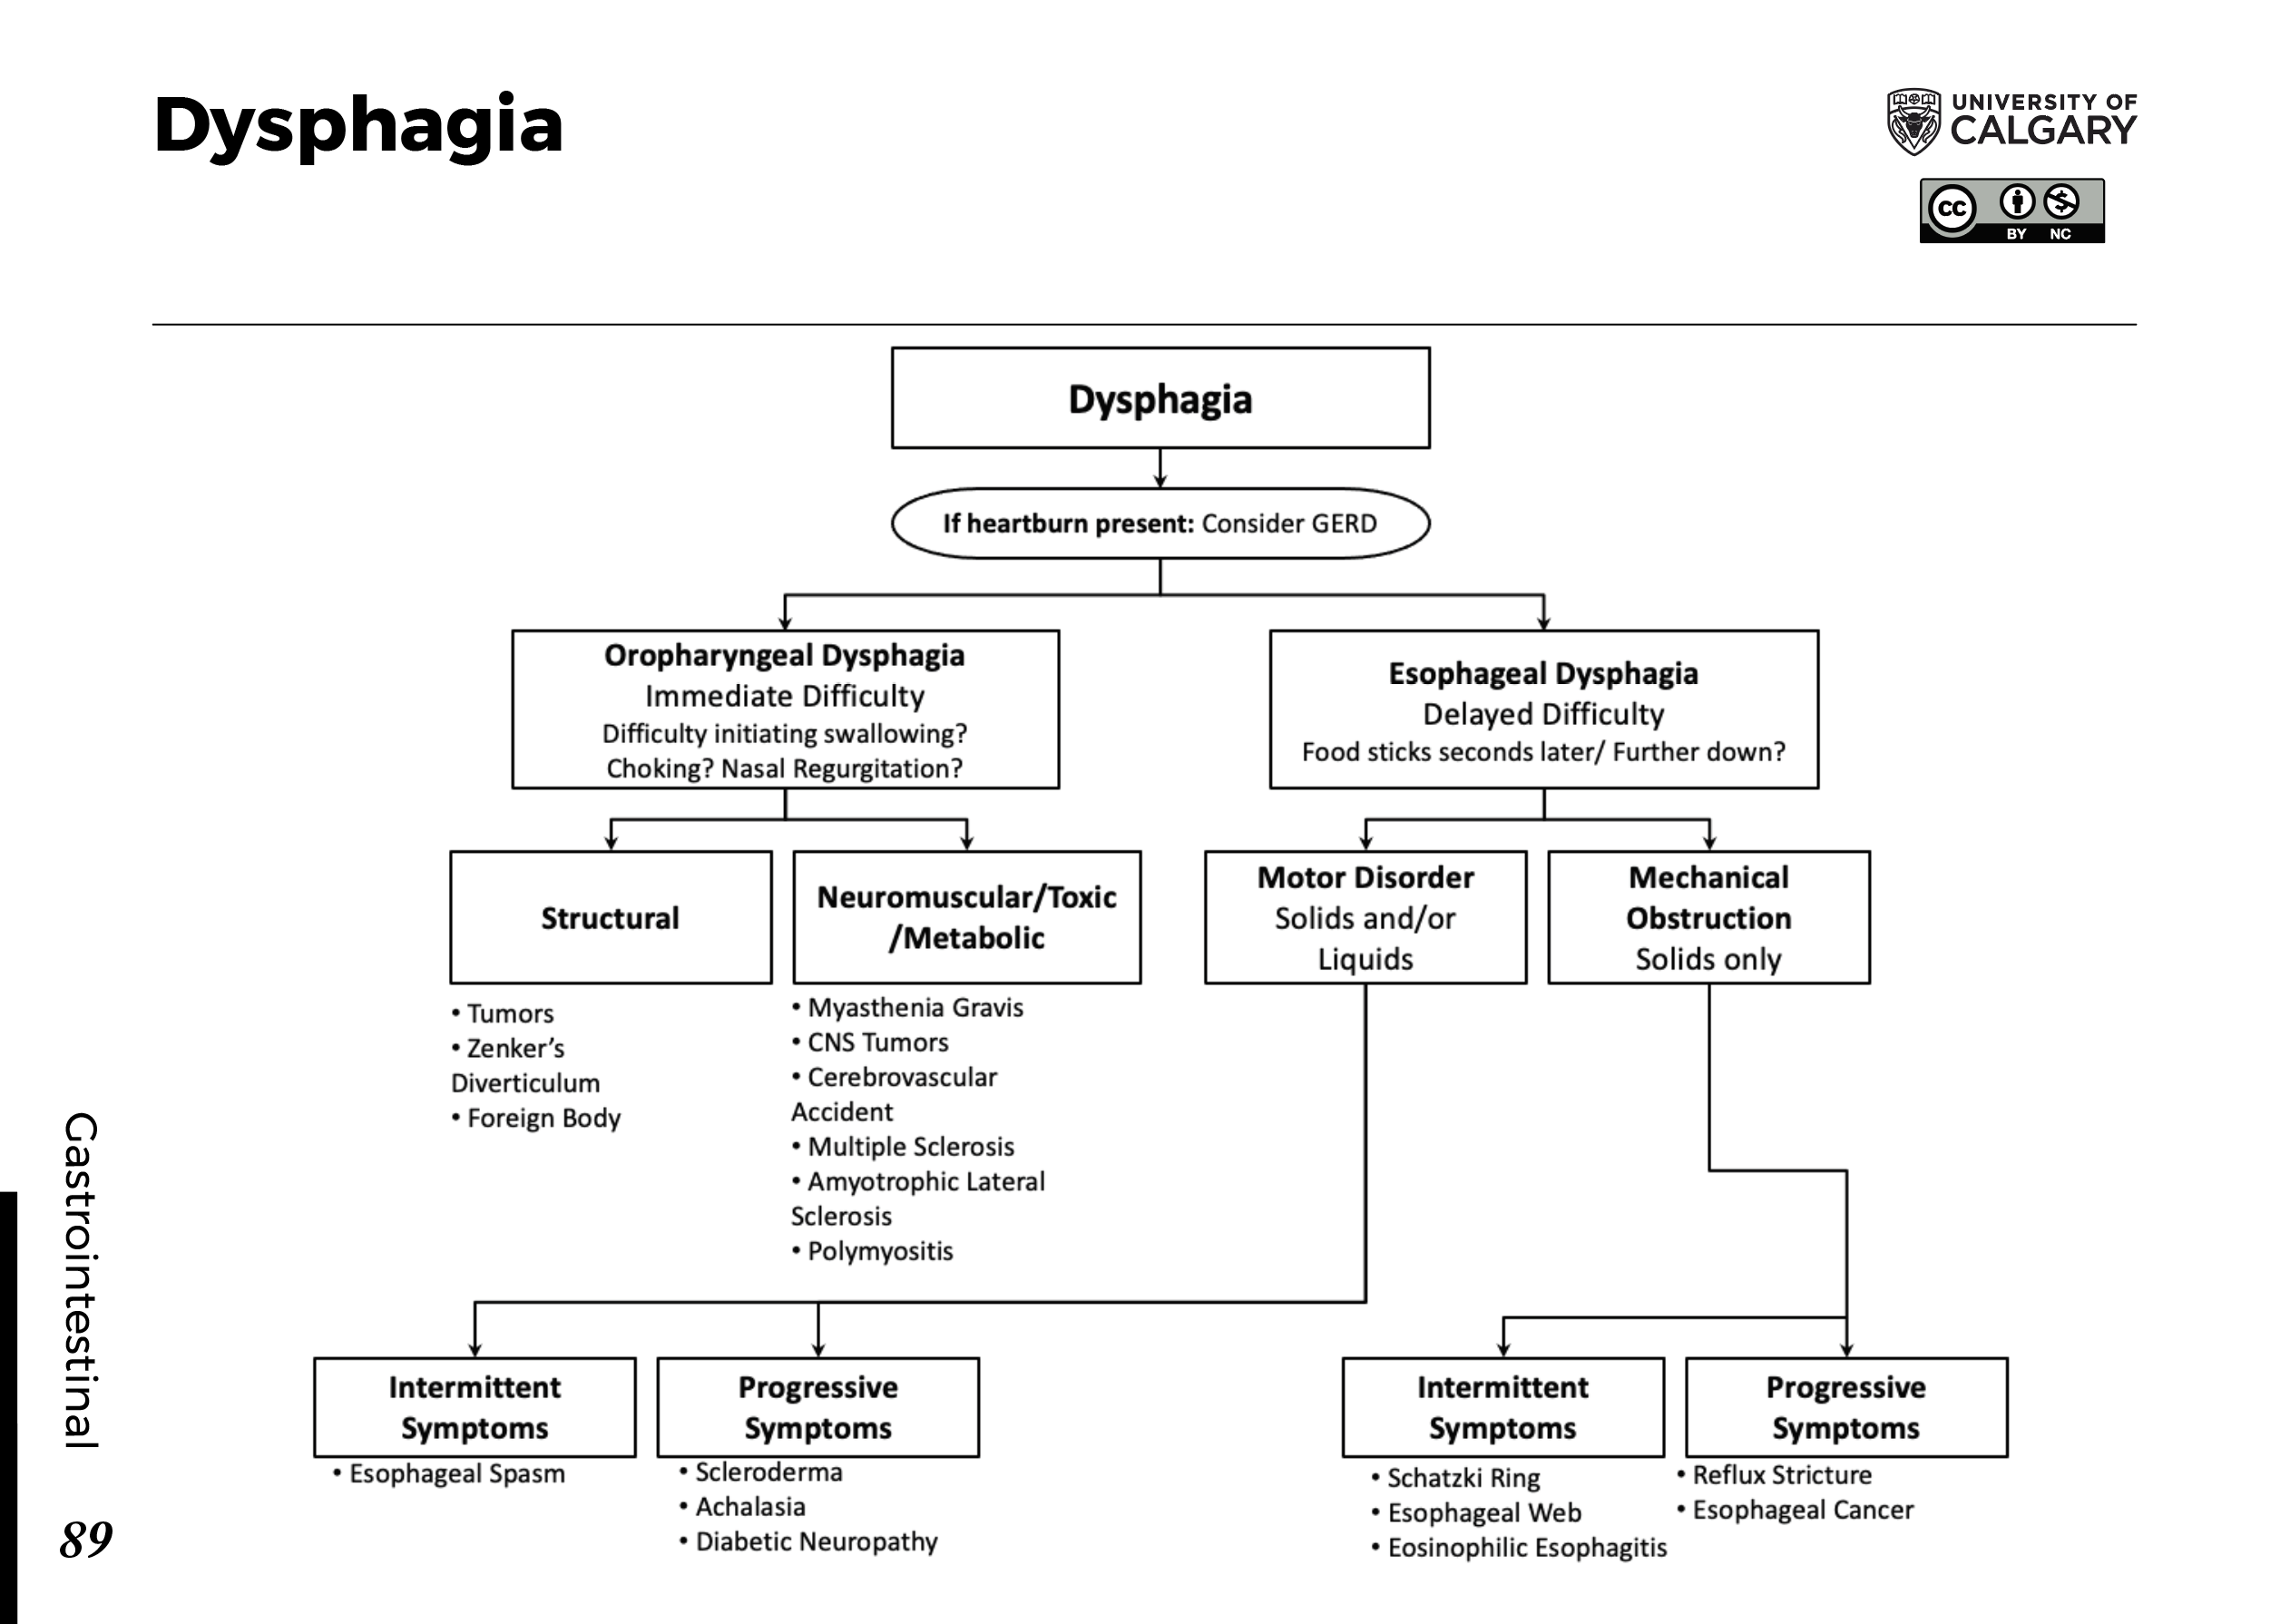 DYSPHAGIA Scheme